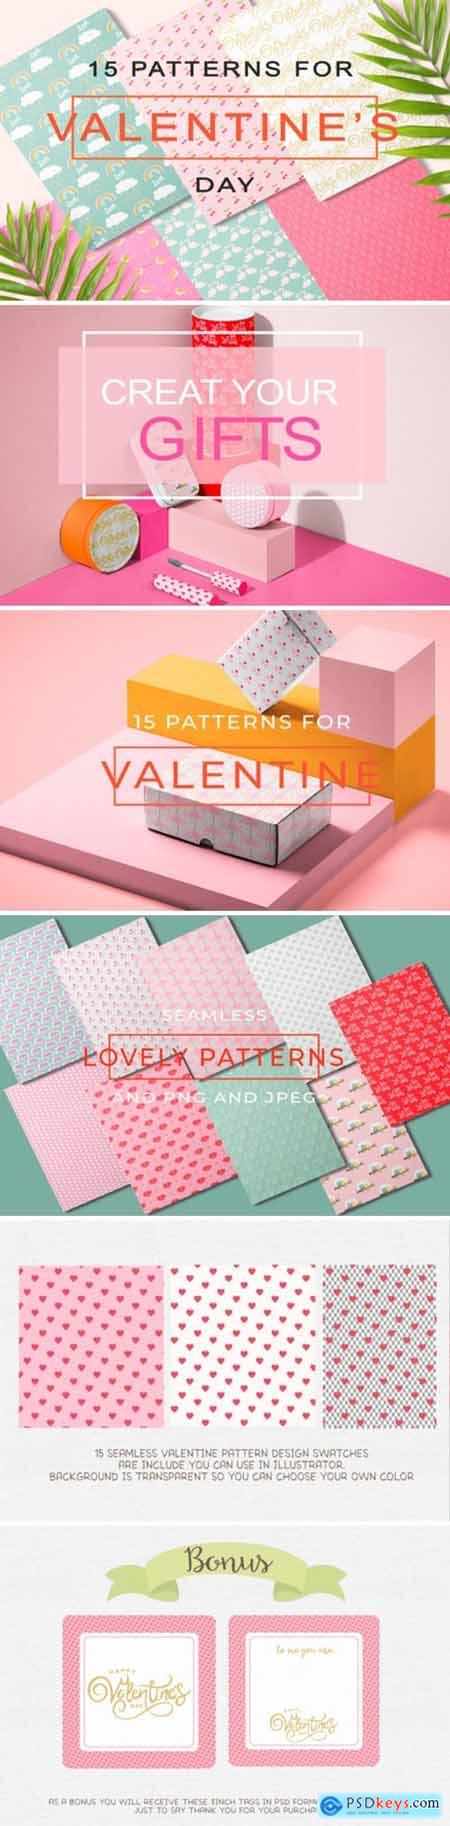 Lovely Valentines Day Pattern 7882368